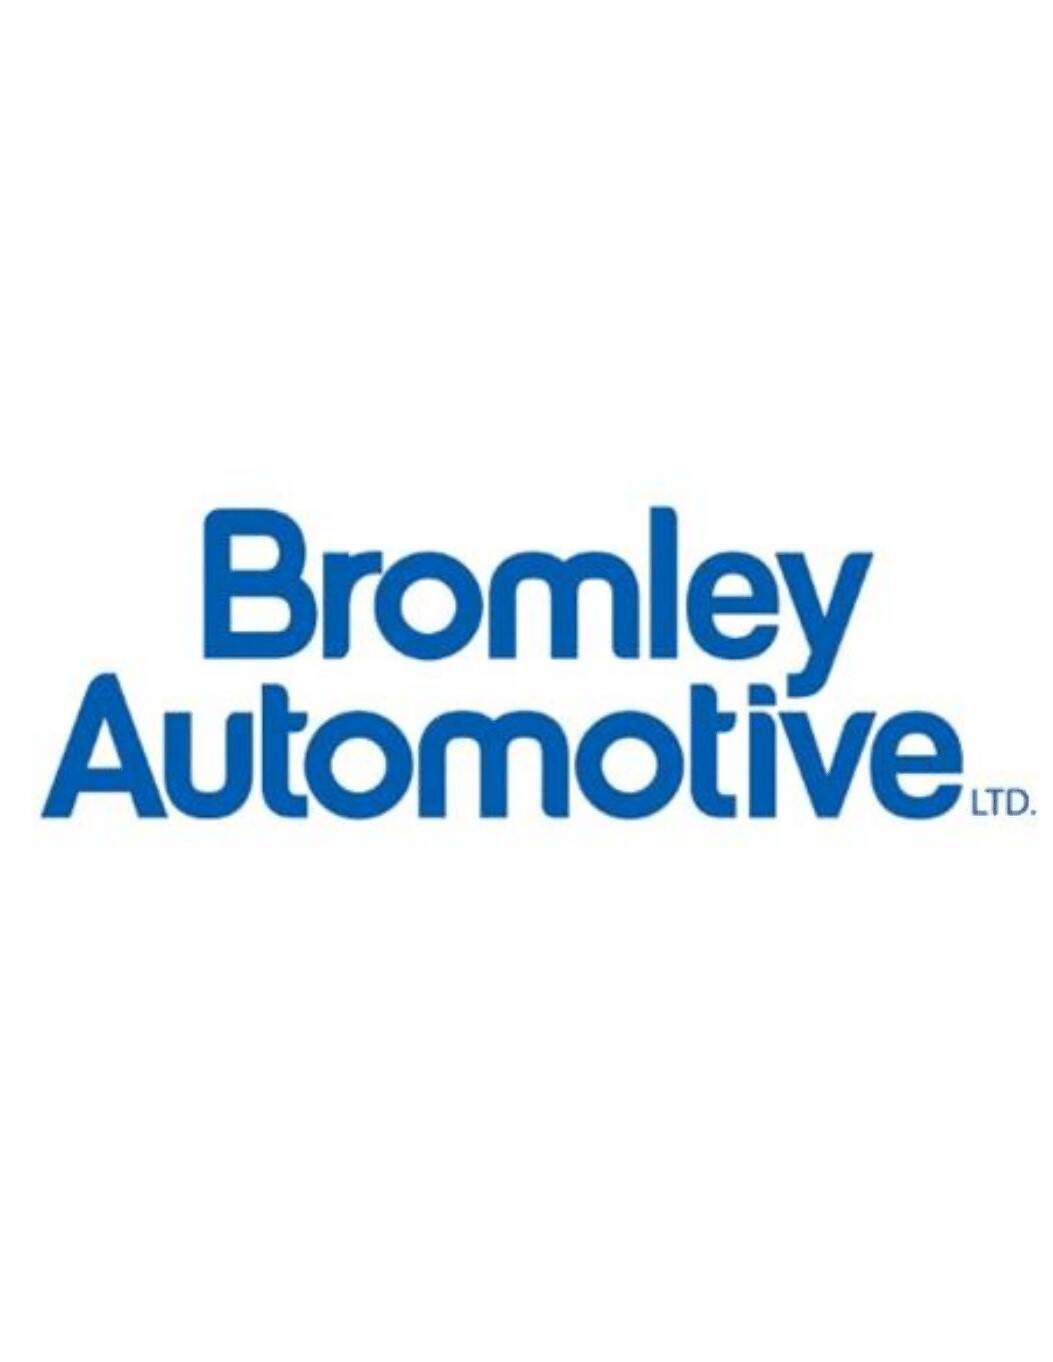 Bromley Automotive